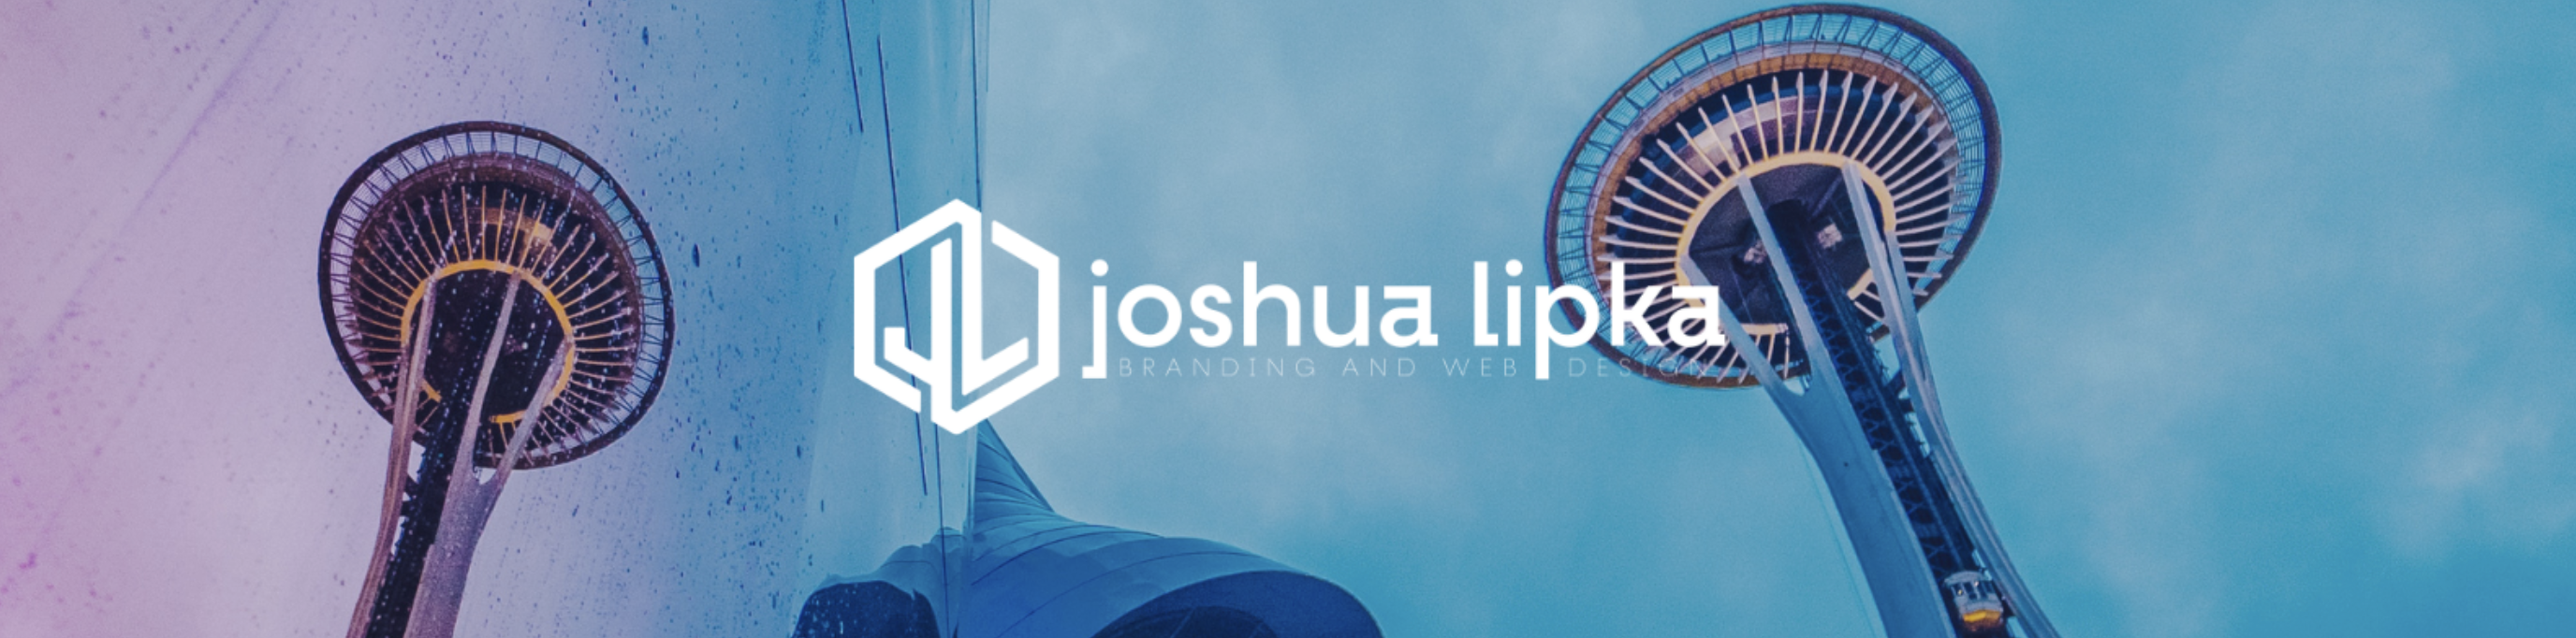 Joshua Lipka | MUSE Design Awards